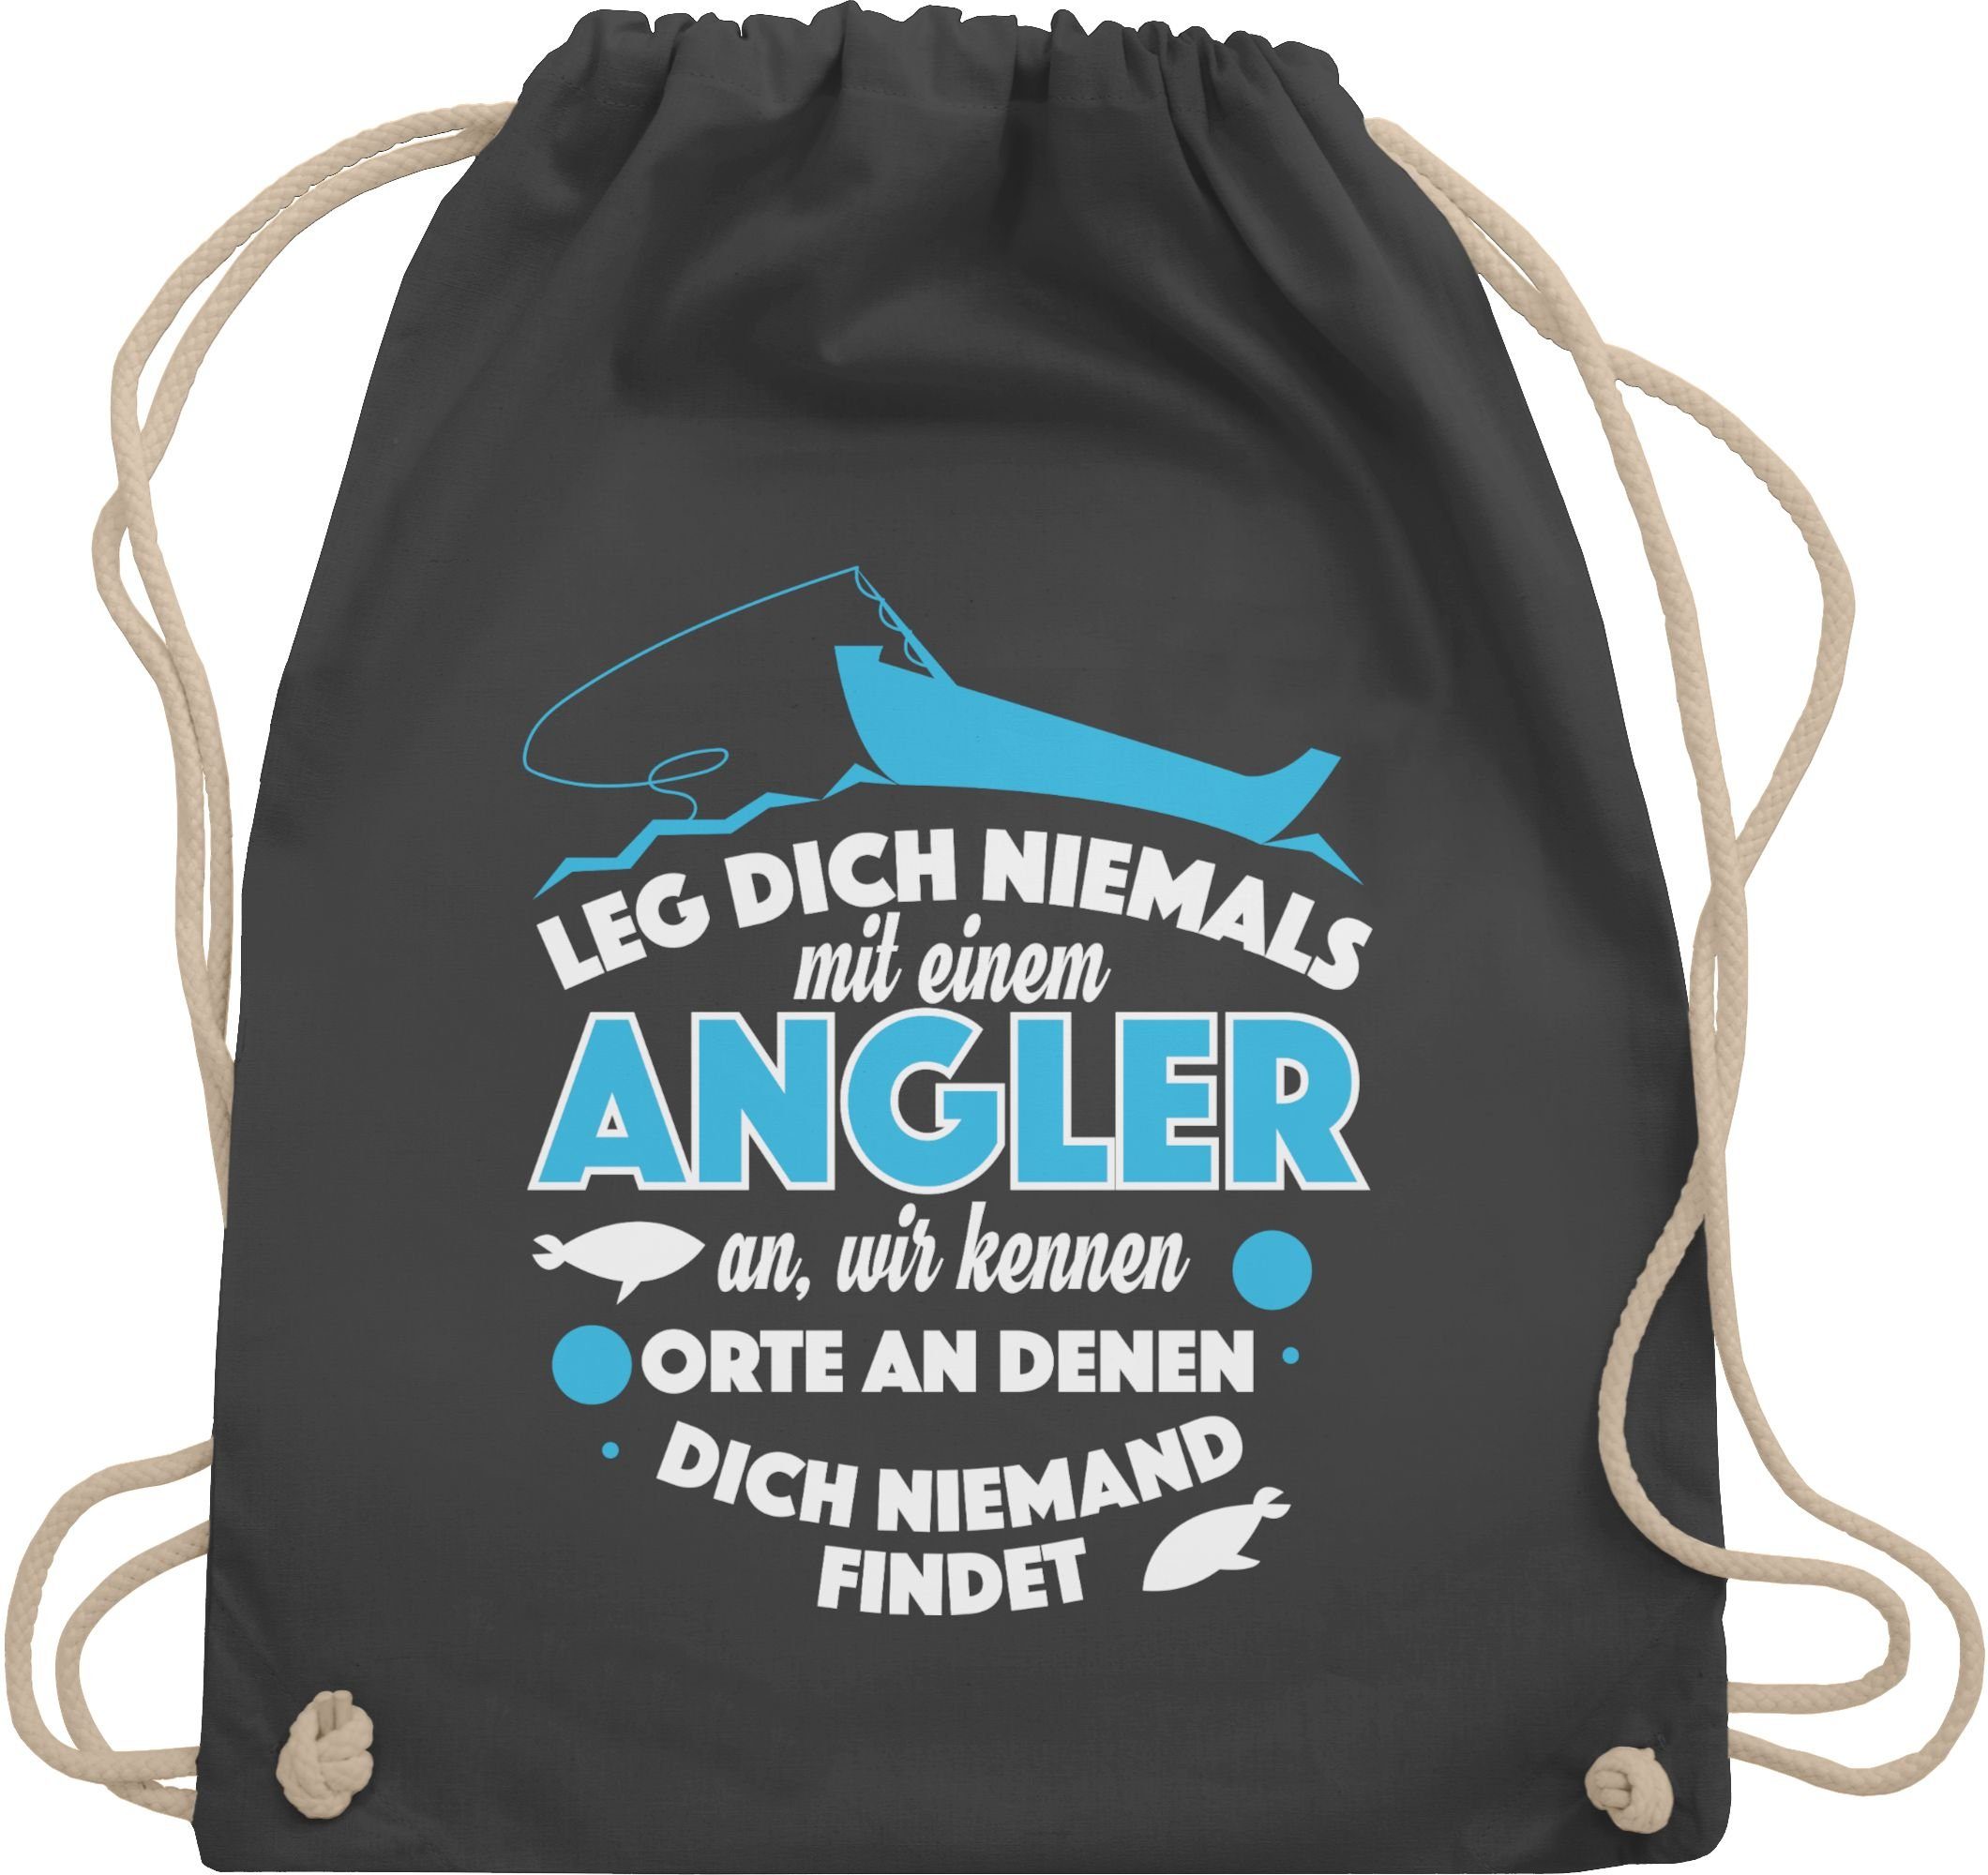 Angler Angler Shirtracer niemals Dunkelgrau 2 mit Geschenke einem Leg dich an, Turnbeutel